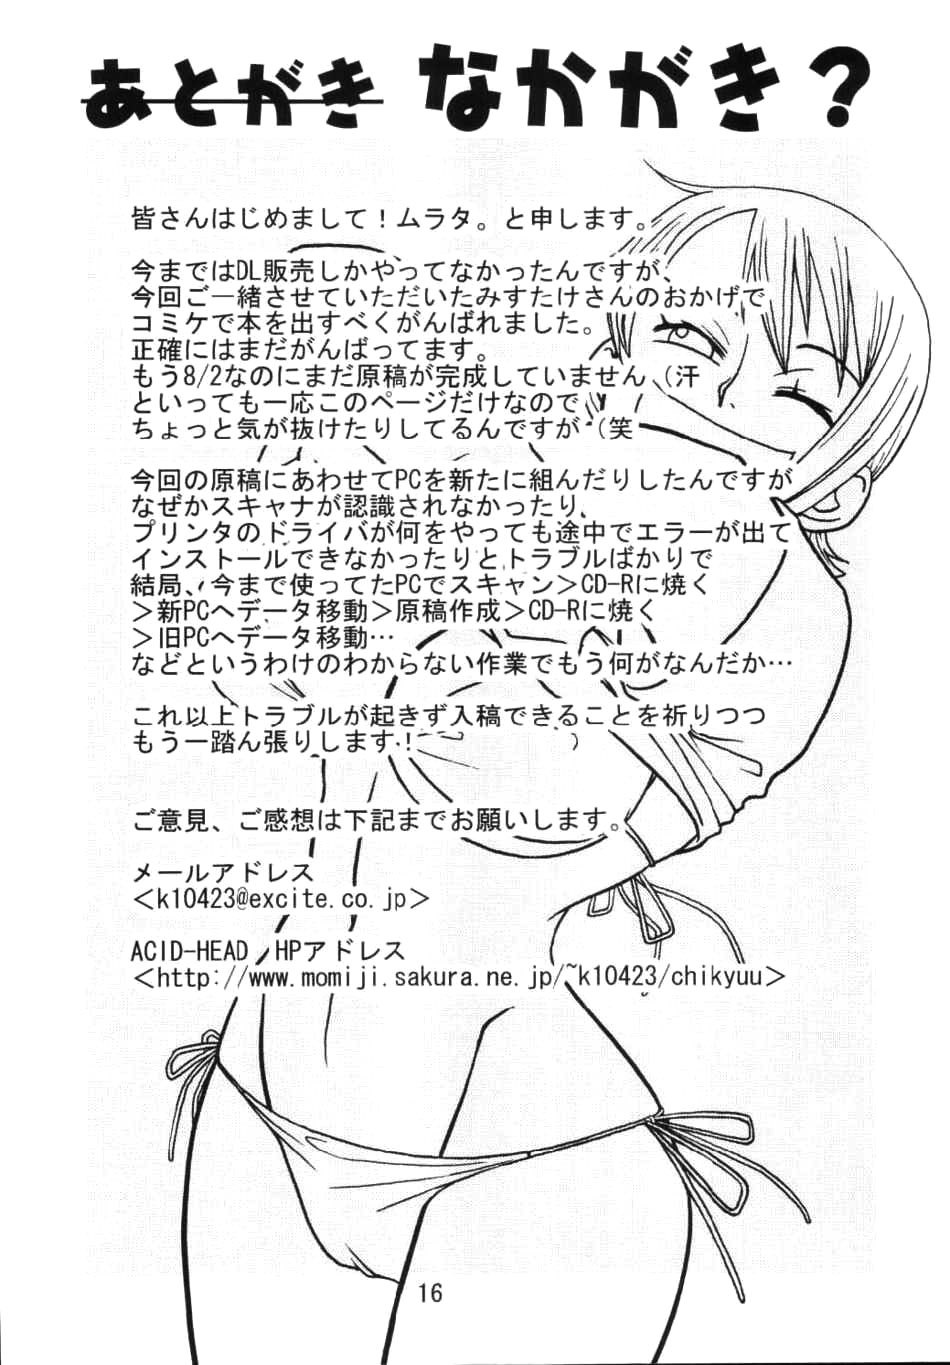 Nami no Koukai Nisshi Special 1 one piece 16 hentai manga